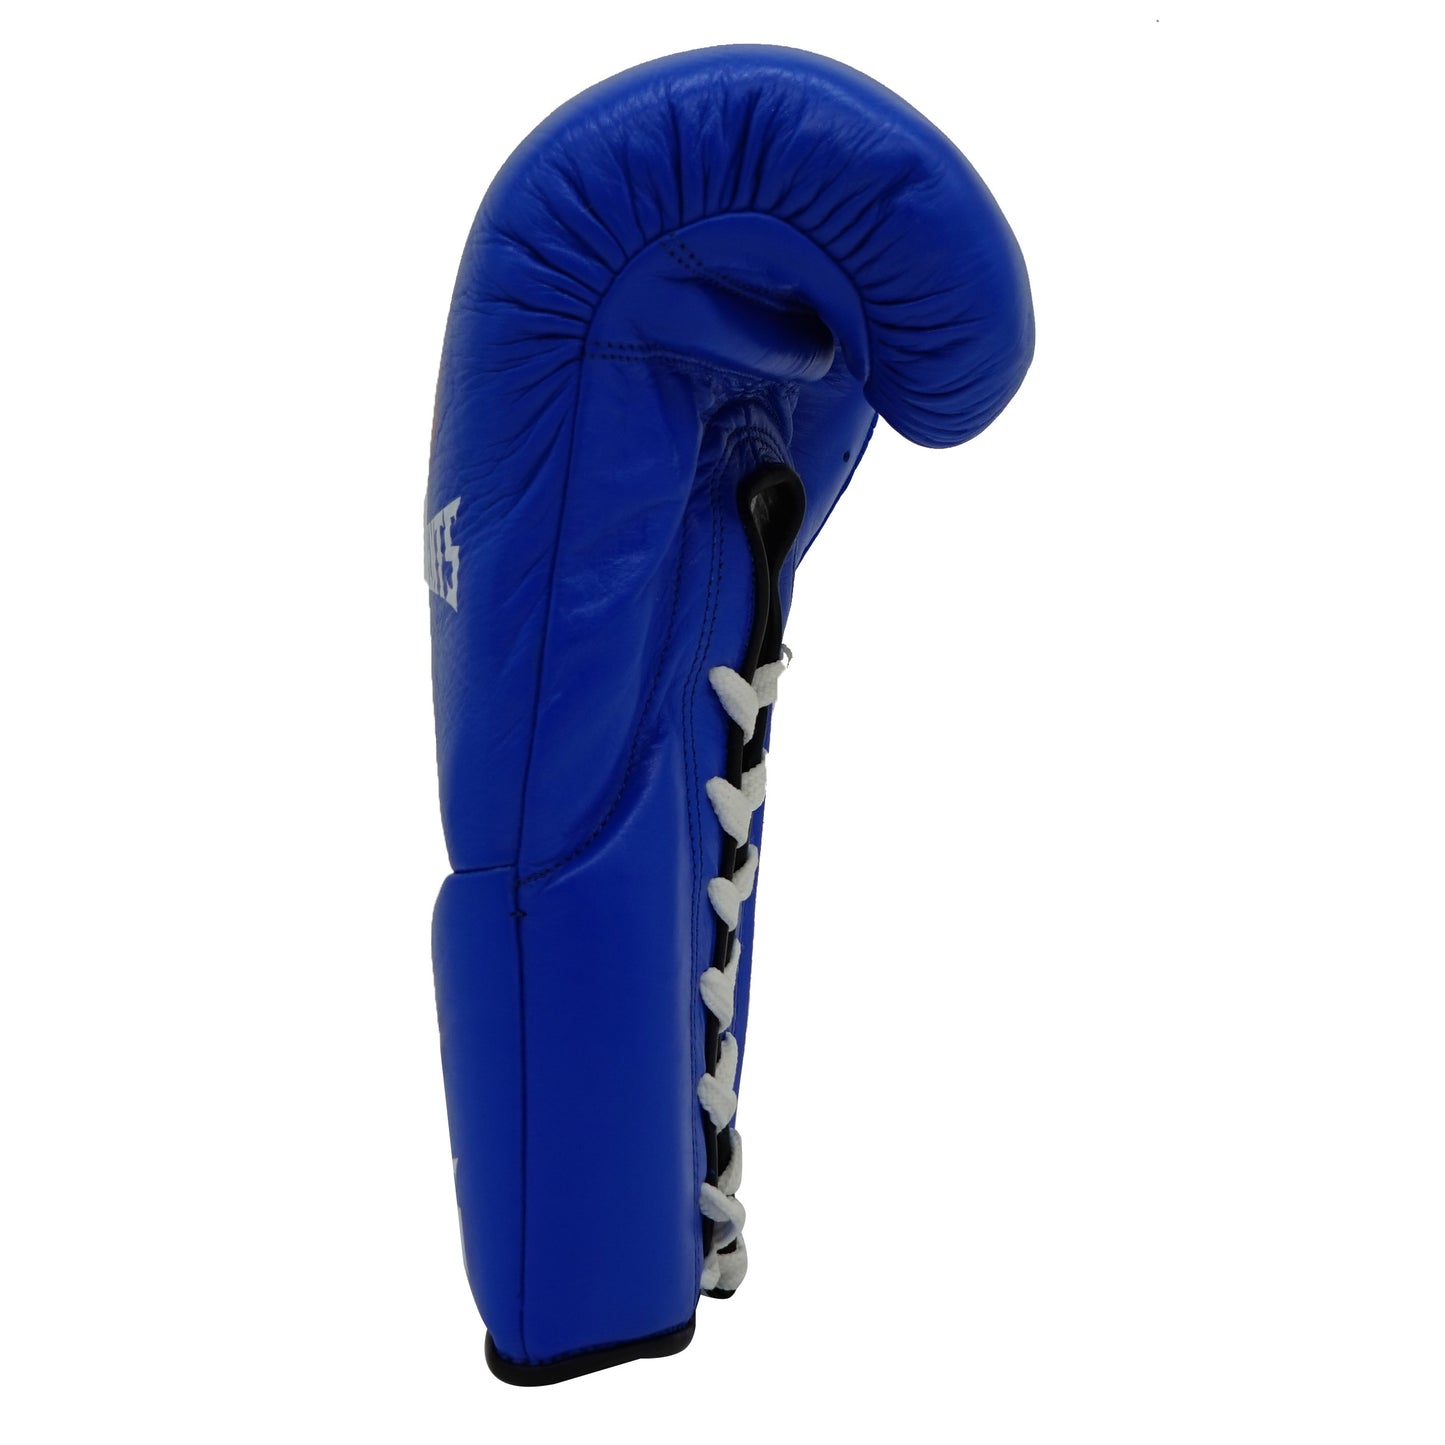 Pro Fighting Boxhandschuh-Blau